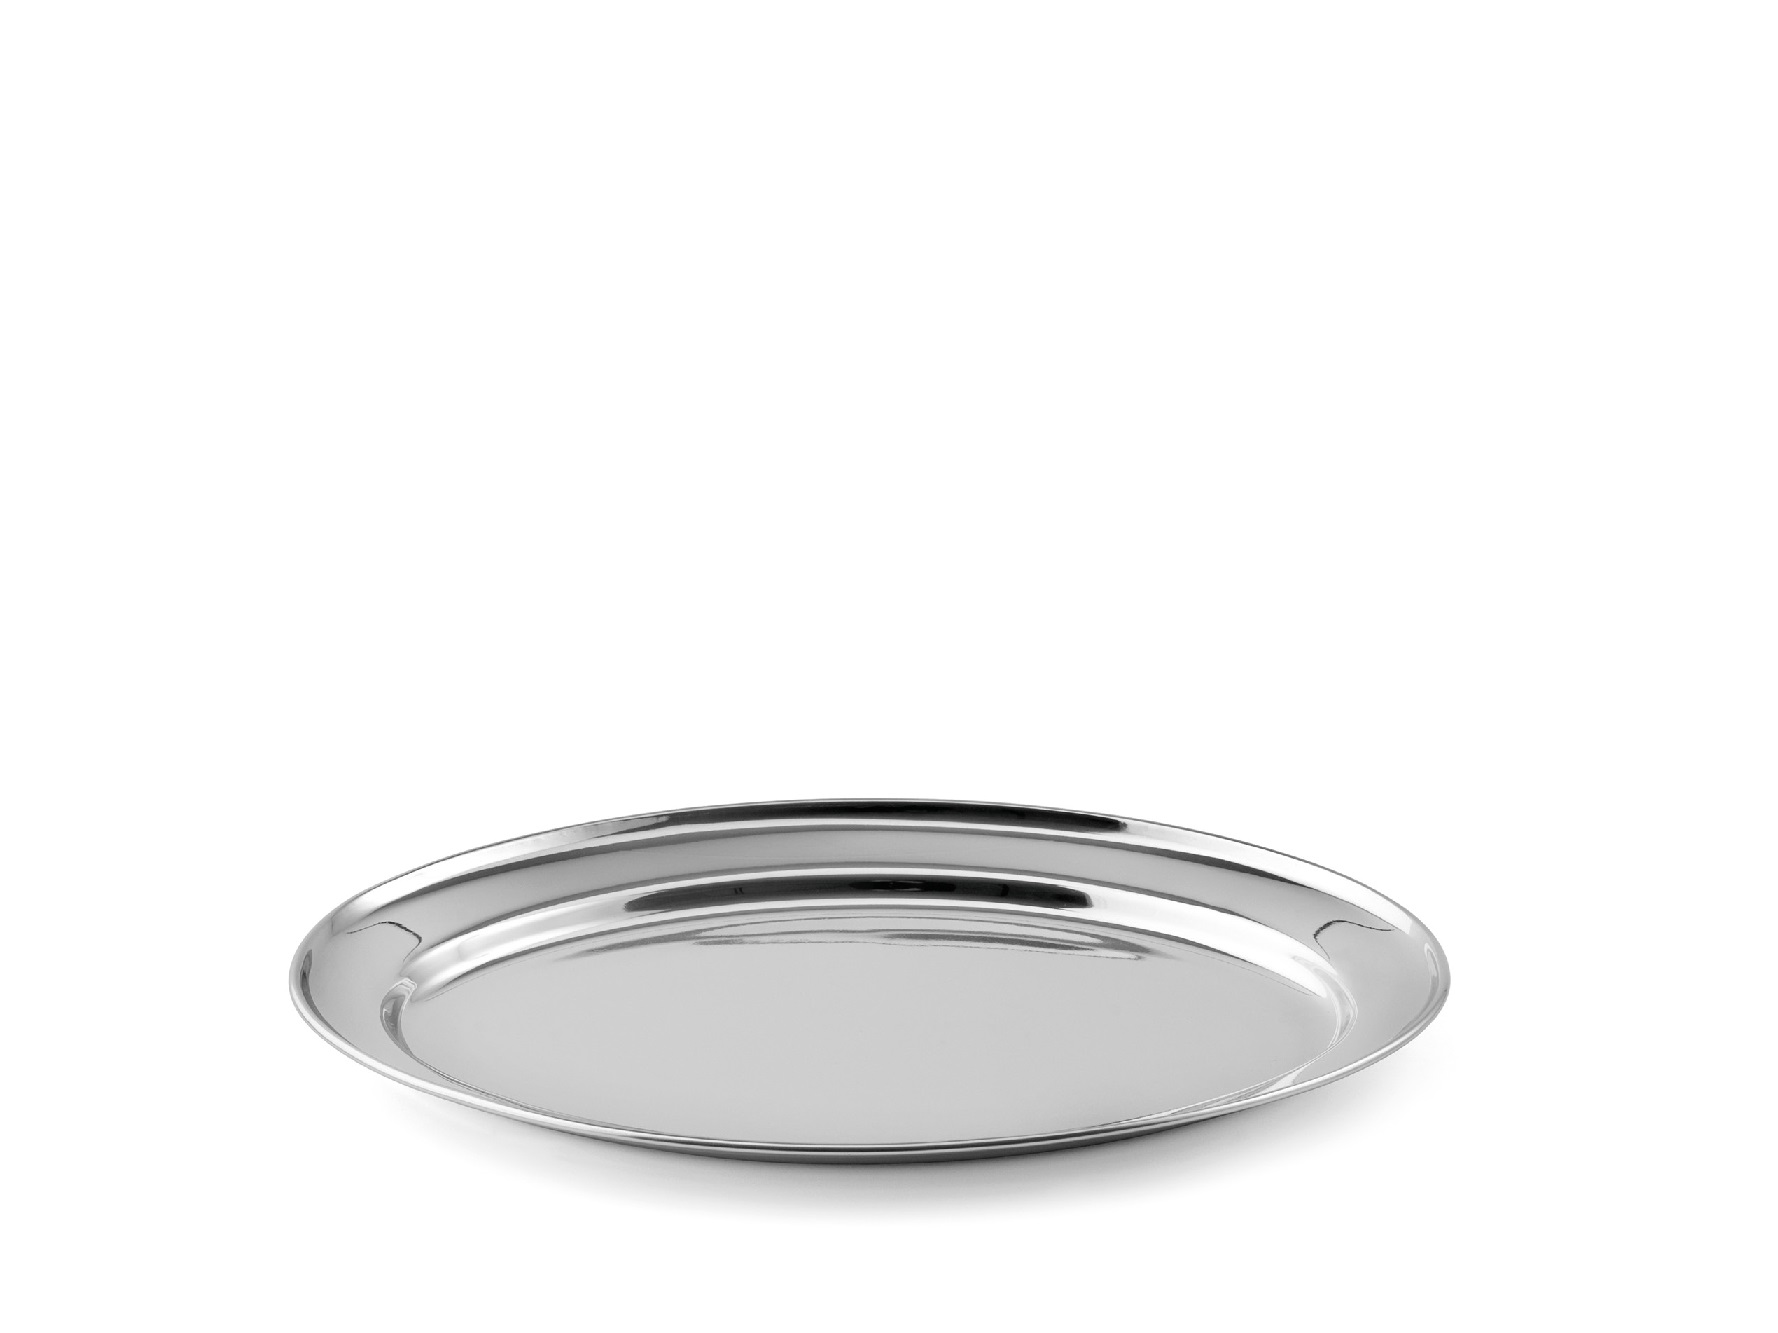 Servierplatte oval 35 cm klassische, ovale Form  -  bordierter Rand 